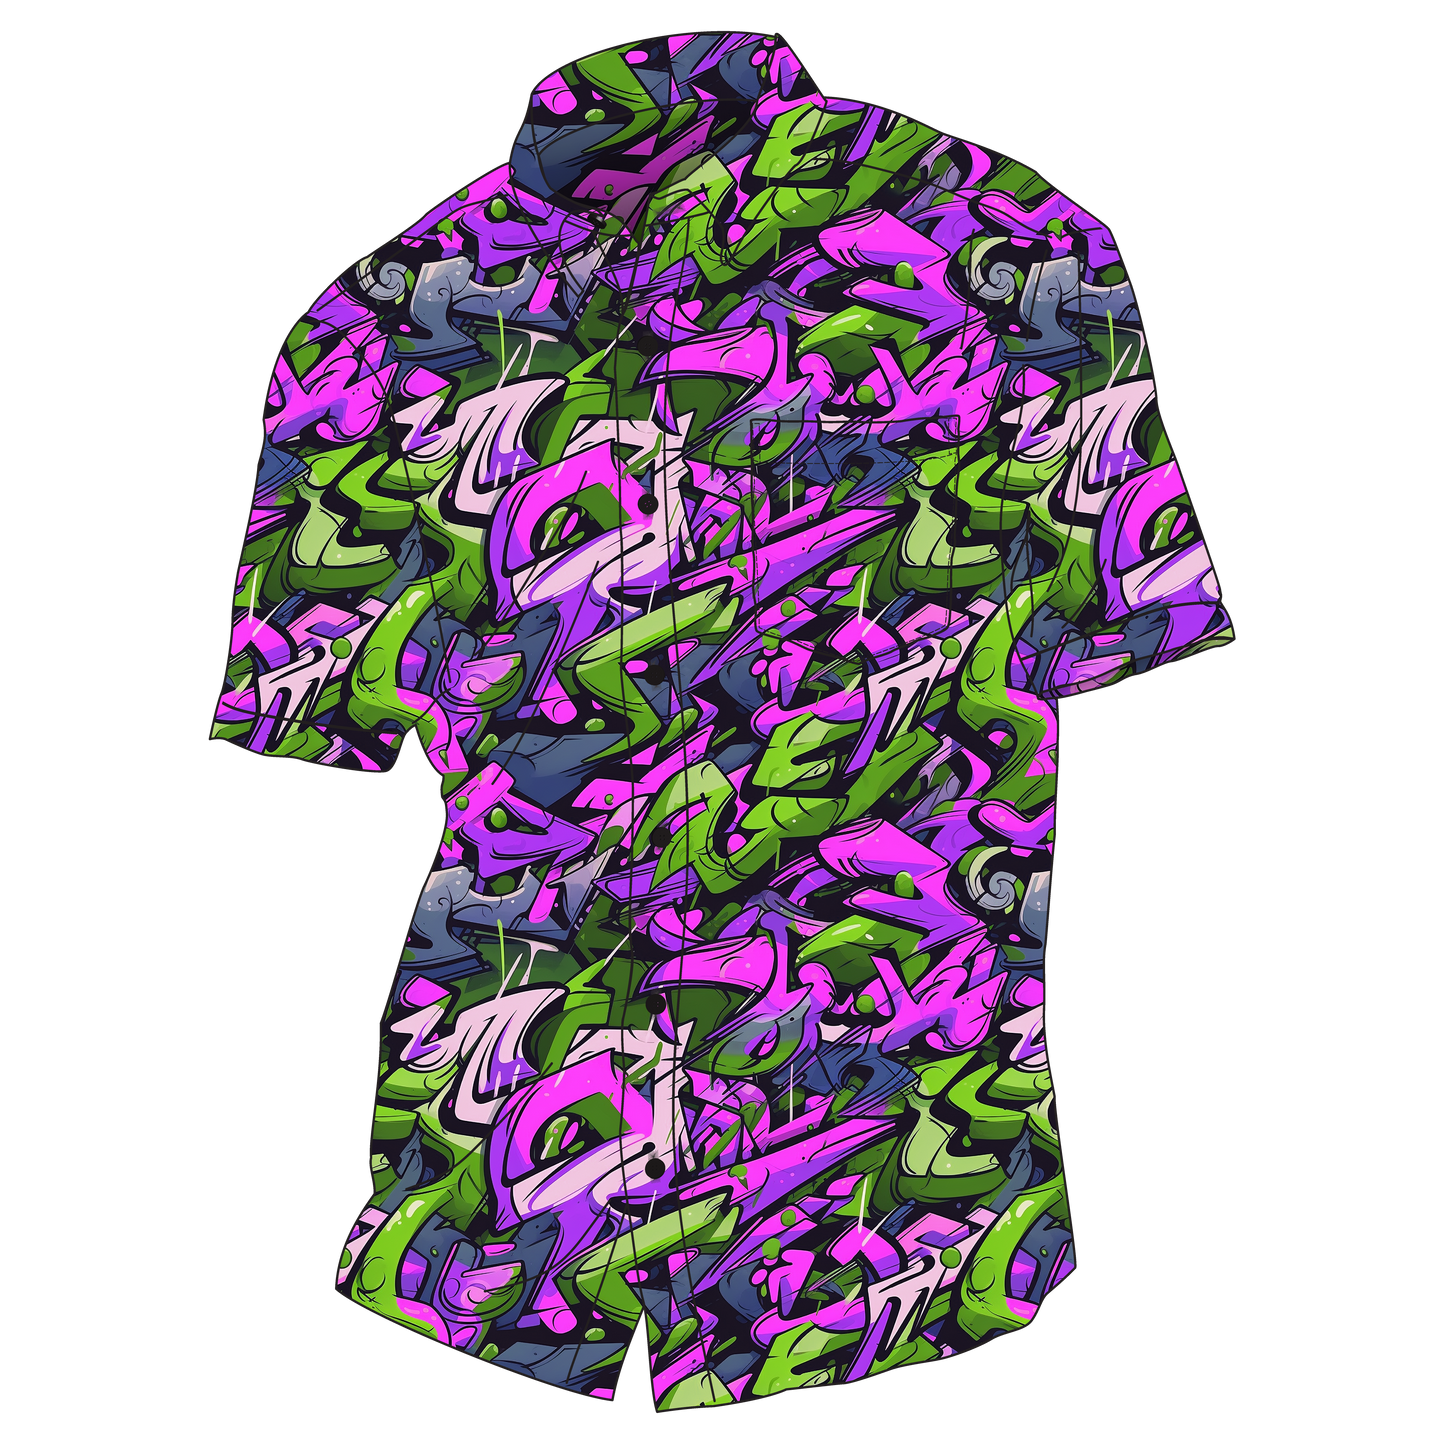 Graffiti Wildstyle (Green, Pink & Purple) Printed Fabric by Studio Ten Design